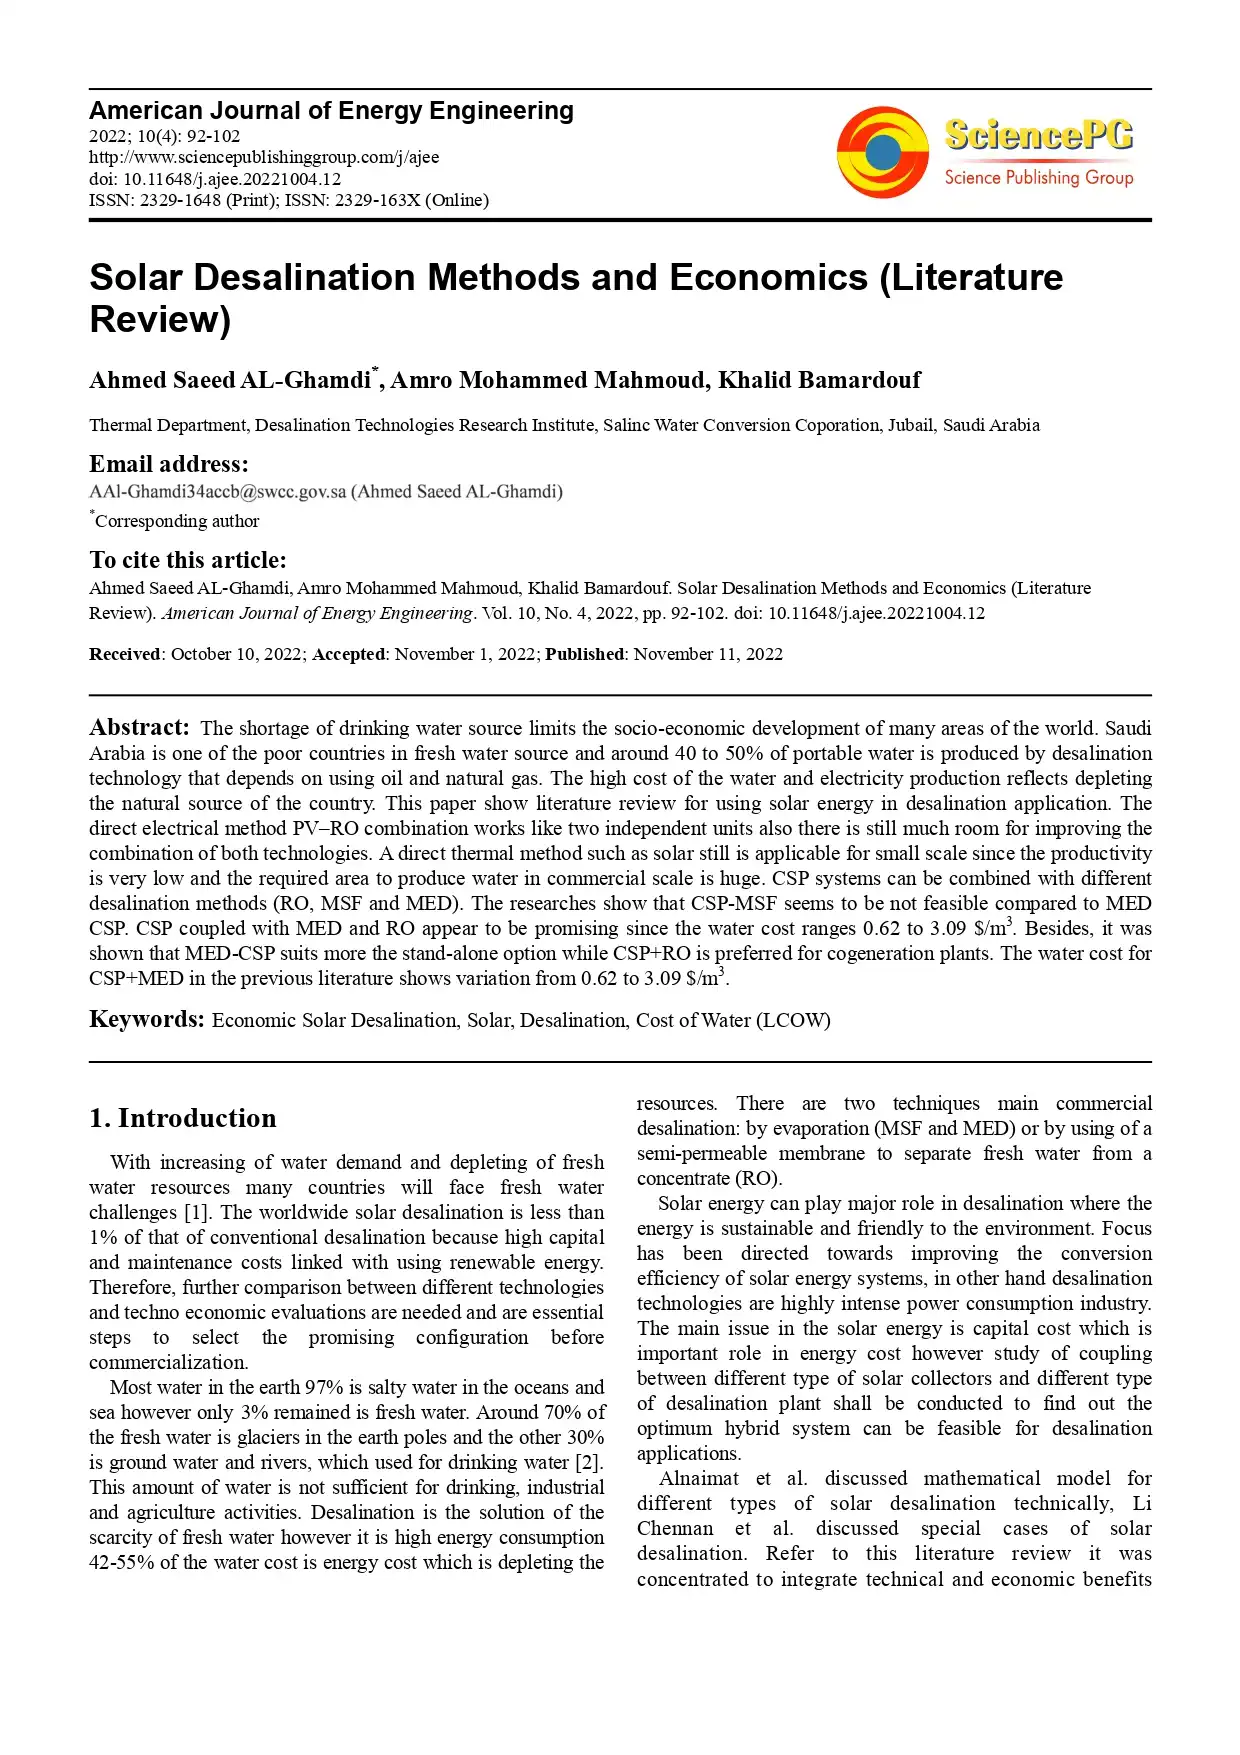 Solar Desalination Methods and Economics (Literature Review)